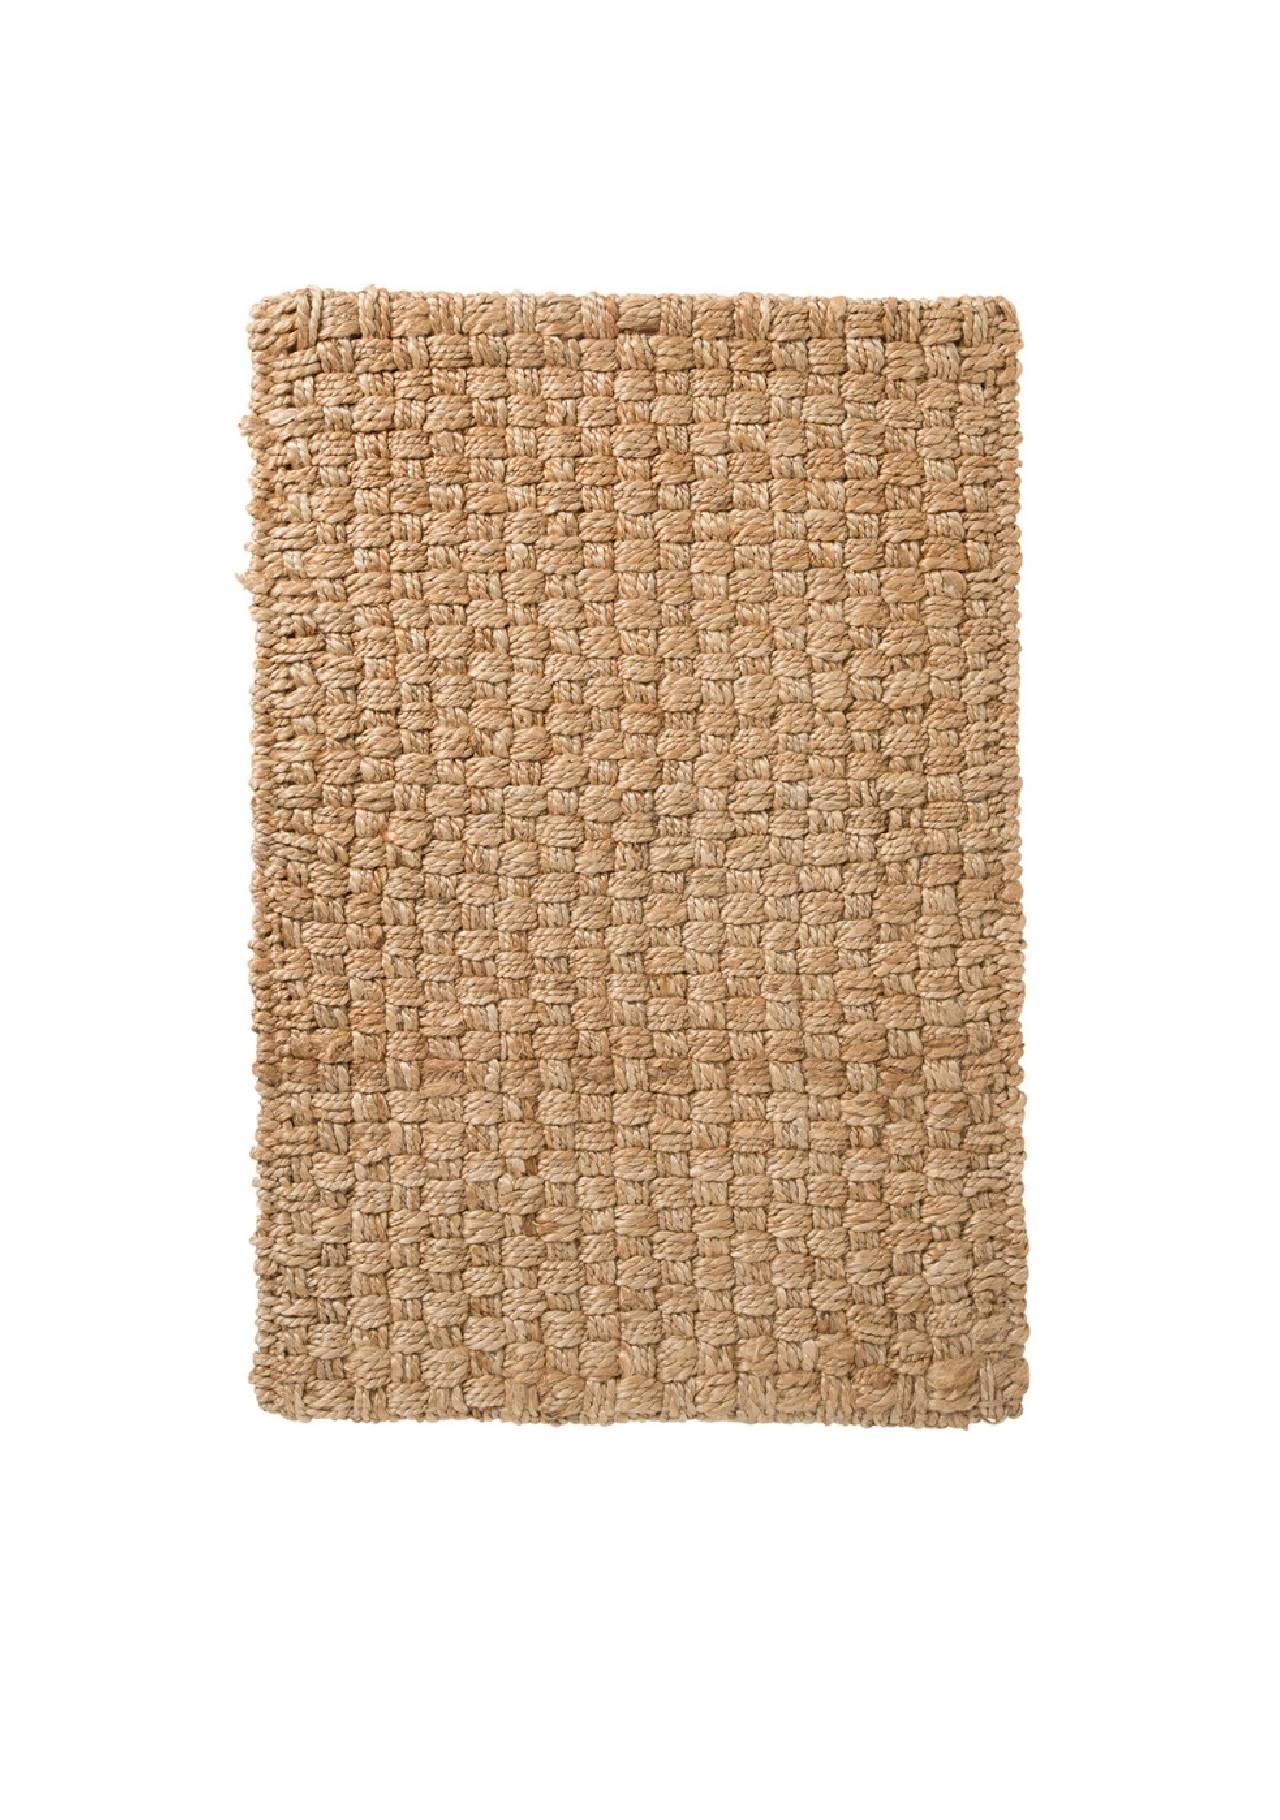 20 ideas low cost alfombra de yute, 24,95€